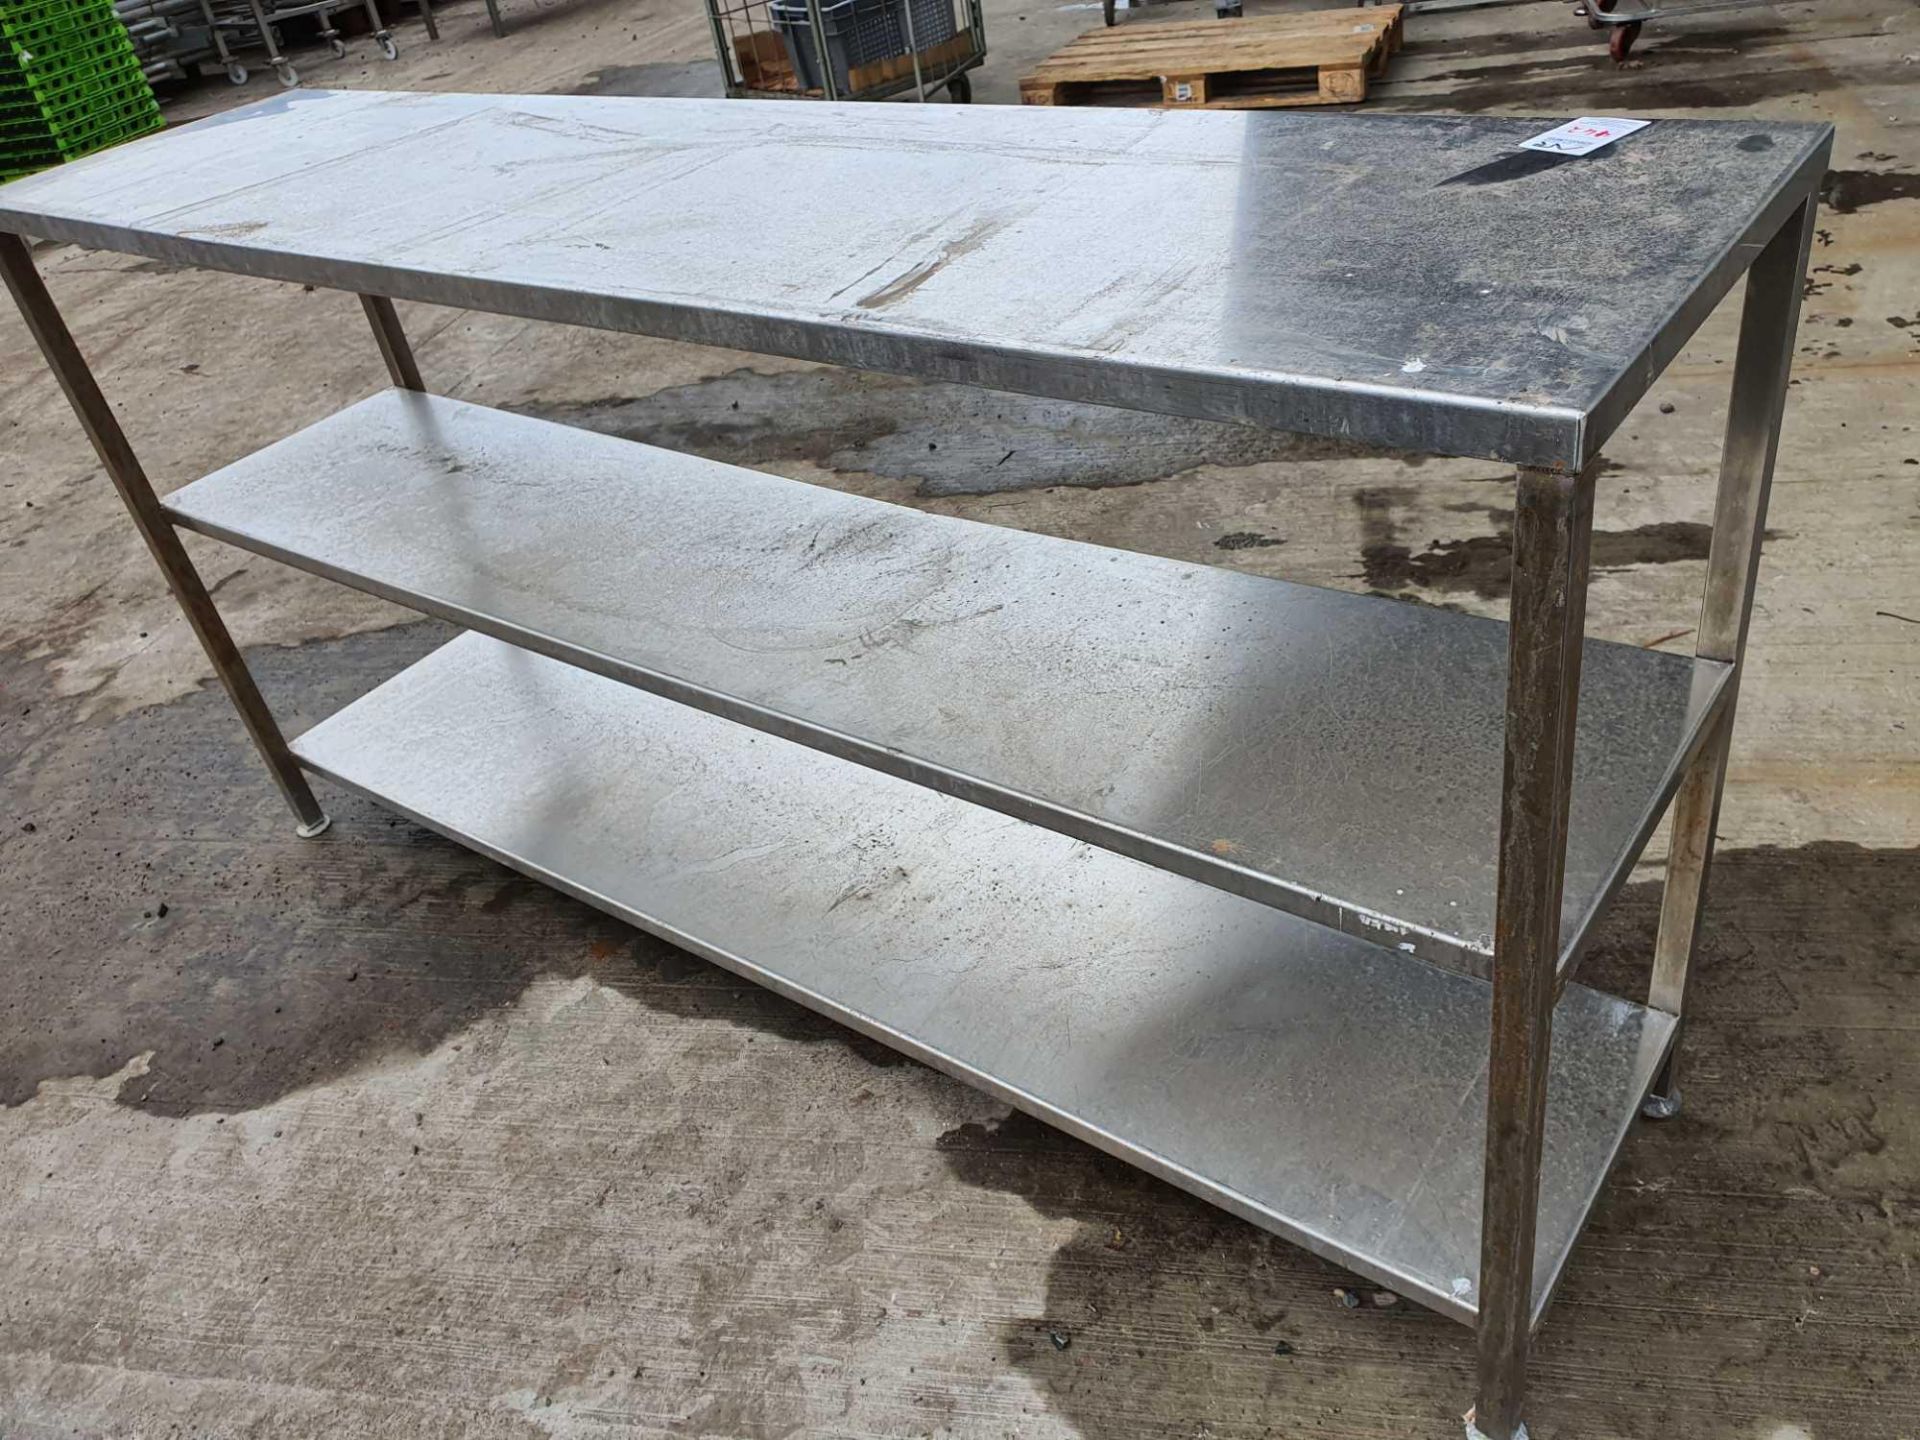 Stainless steel 3 tier shelves